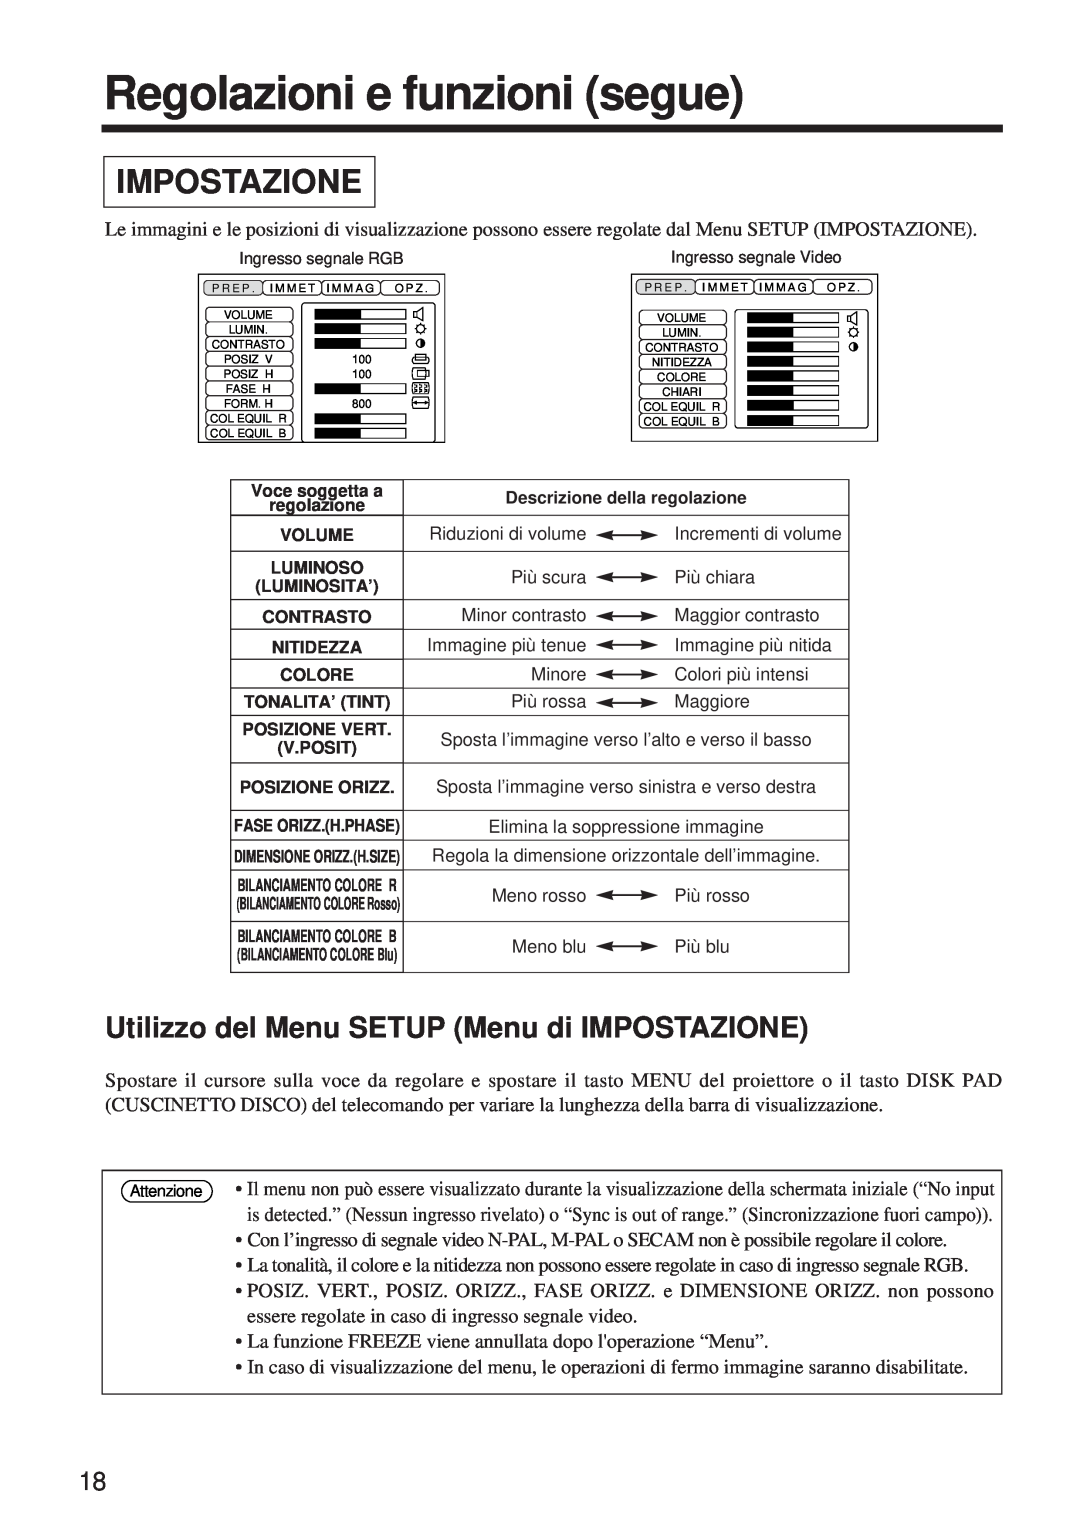 BOXLIGHT MP-650i user manual Regolazioni e funzioni segue, Impostazione, Utilizzo del Menu SETUP Menu di IMPOSTAZIONE 